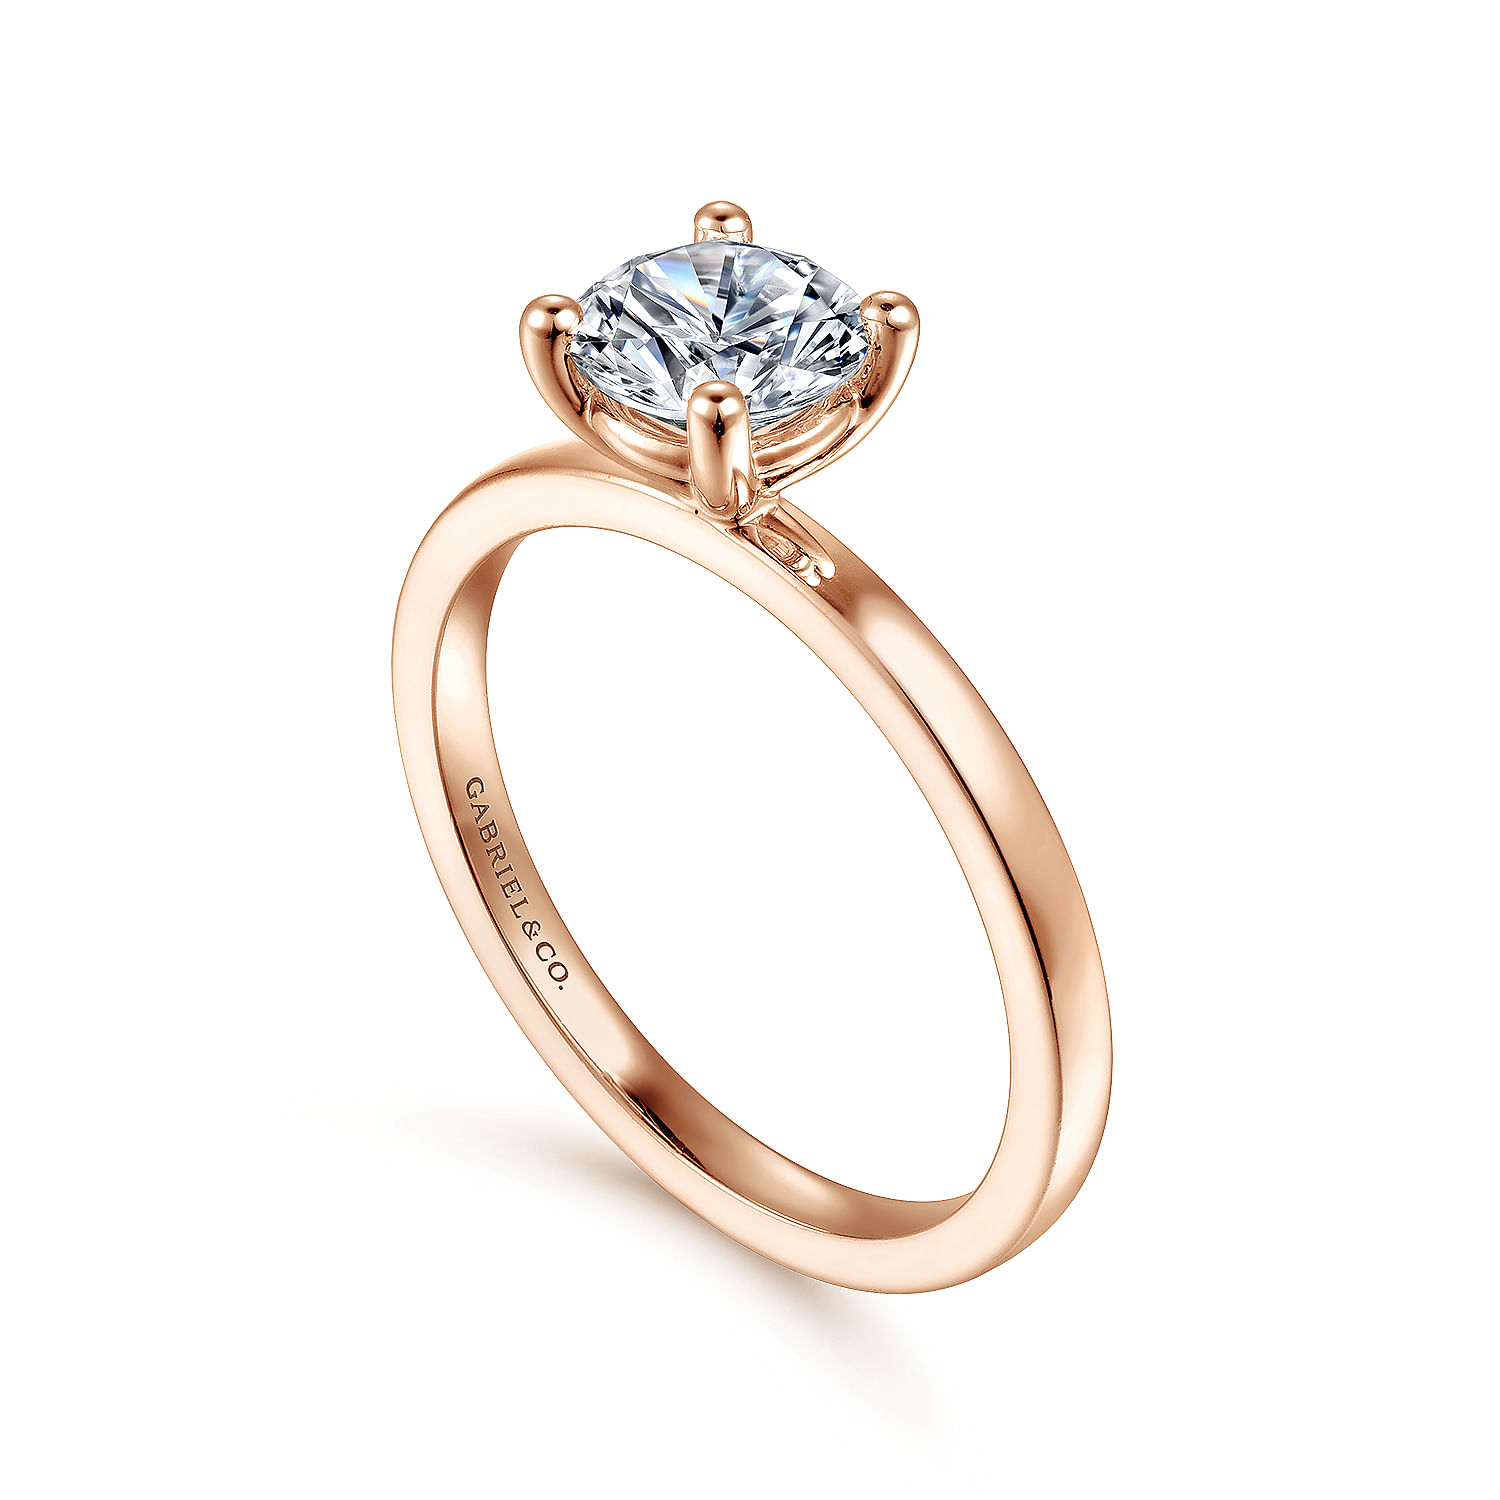 Rose Gold Engagement Rings for Modern & Romantic Feel | Gabriel & Co.